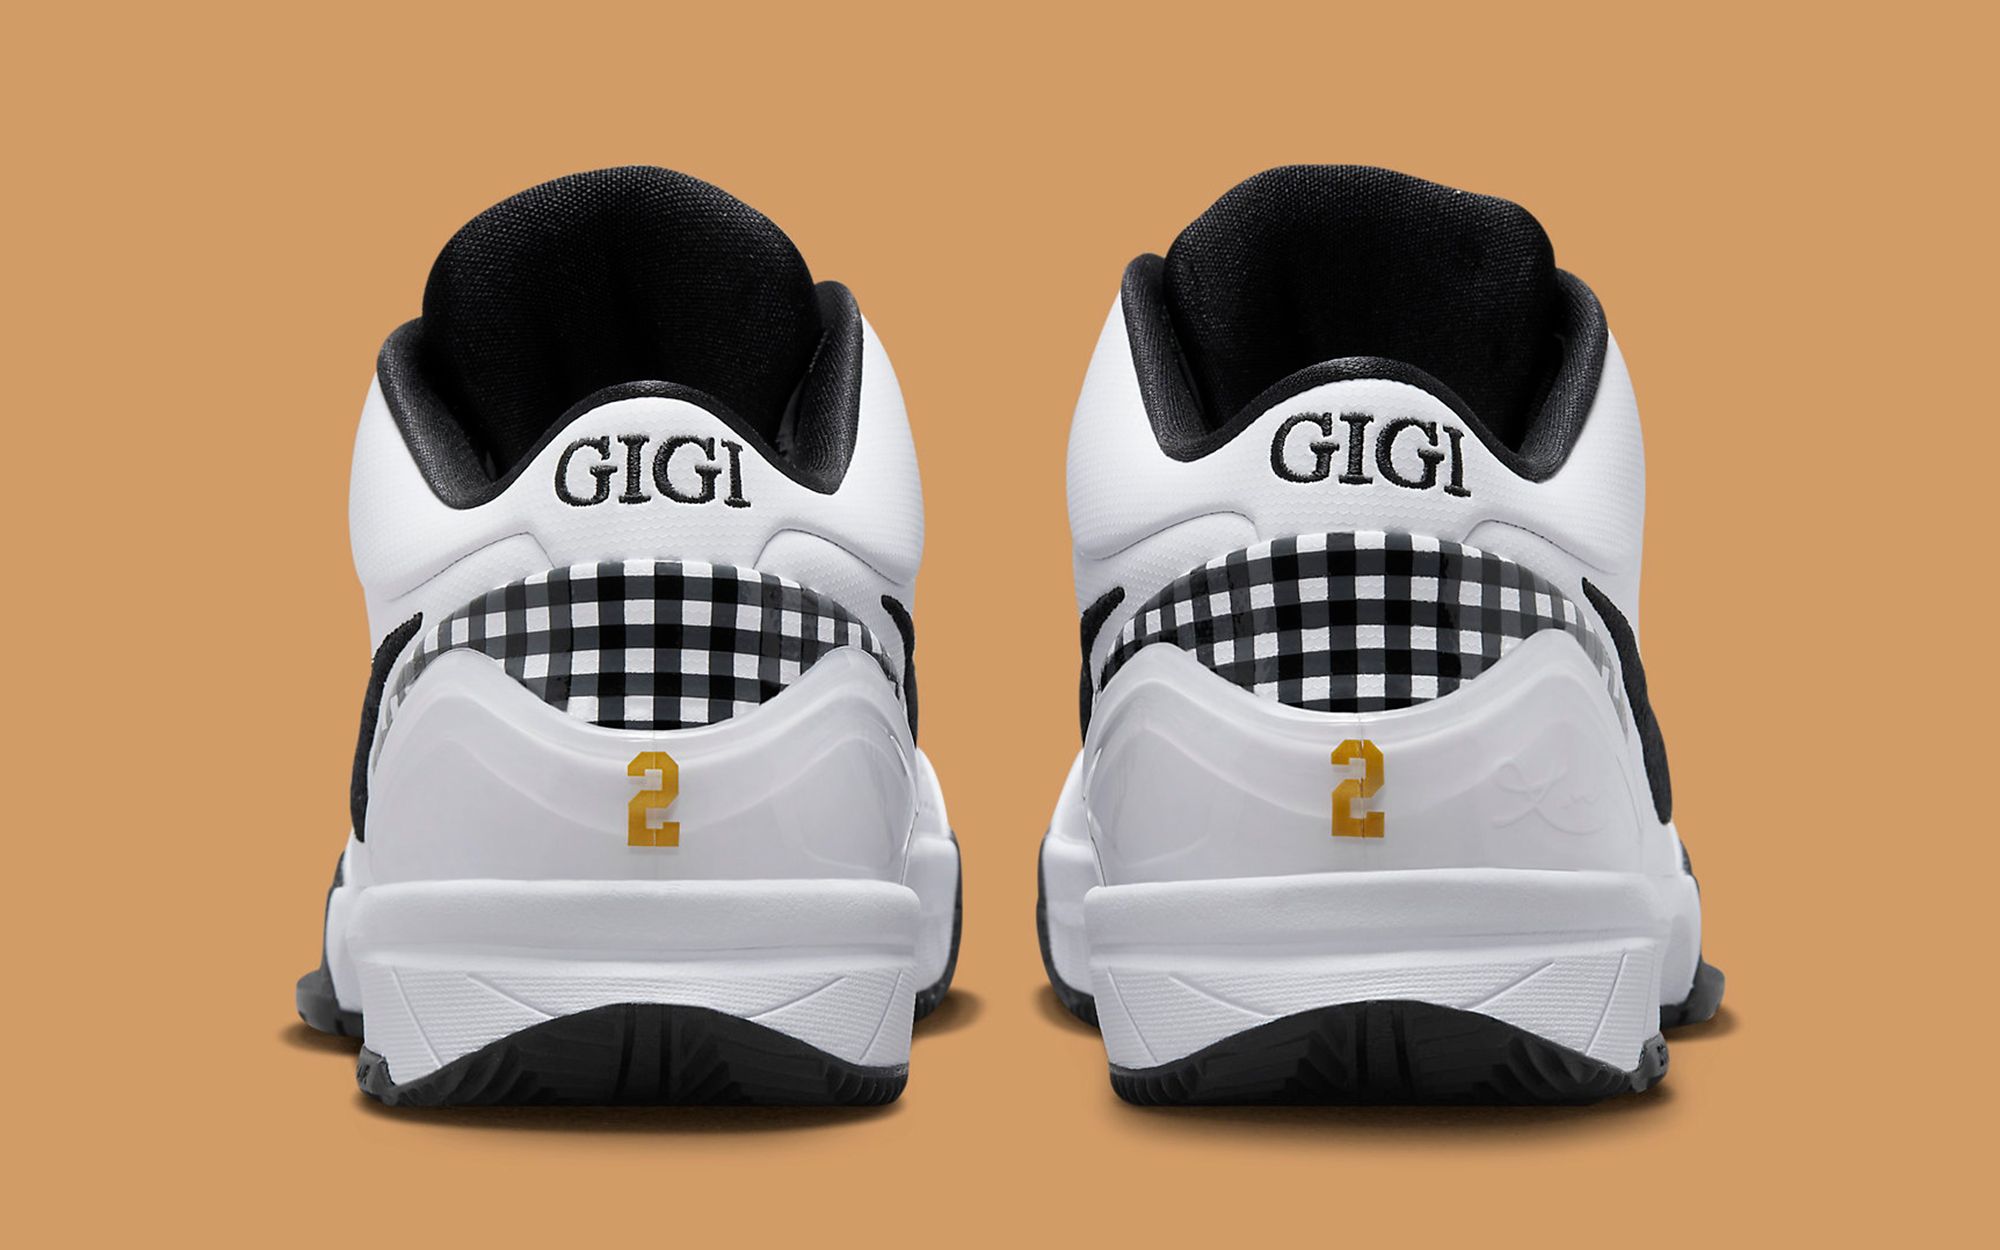 Where to Buy the Nike Kobe 4 Protro “Gigi” | House of Heat°